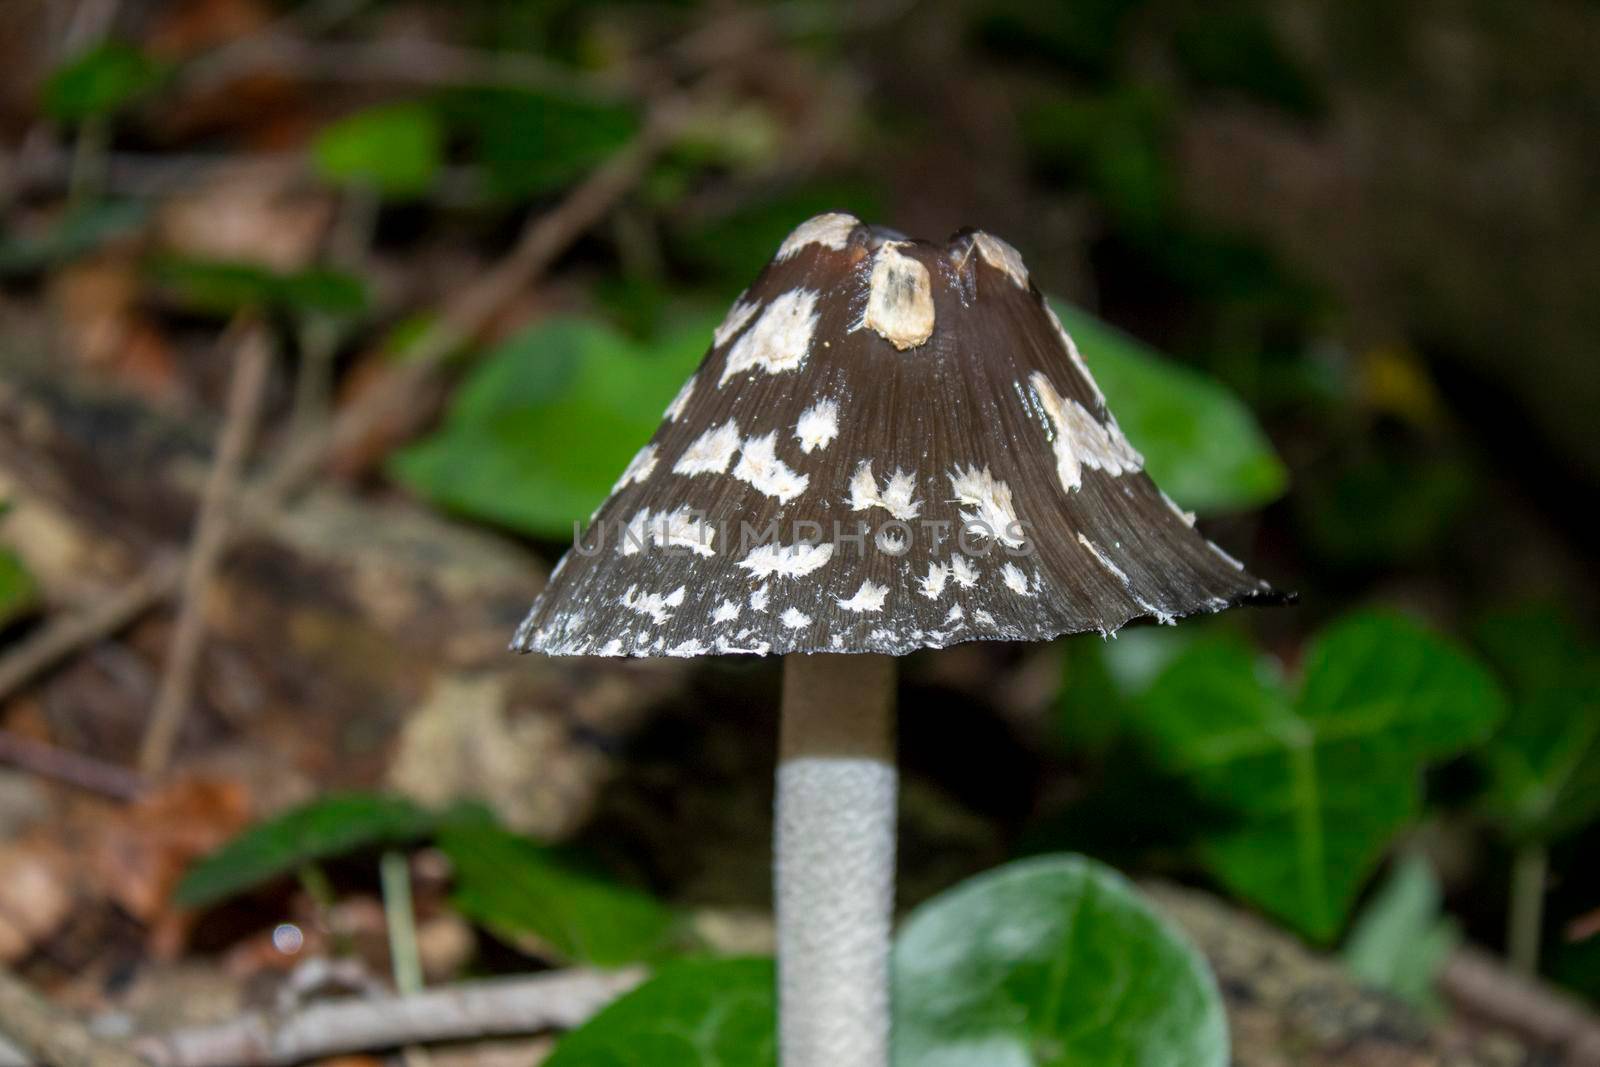 A strange brown mushroom with white spots